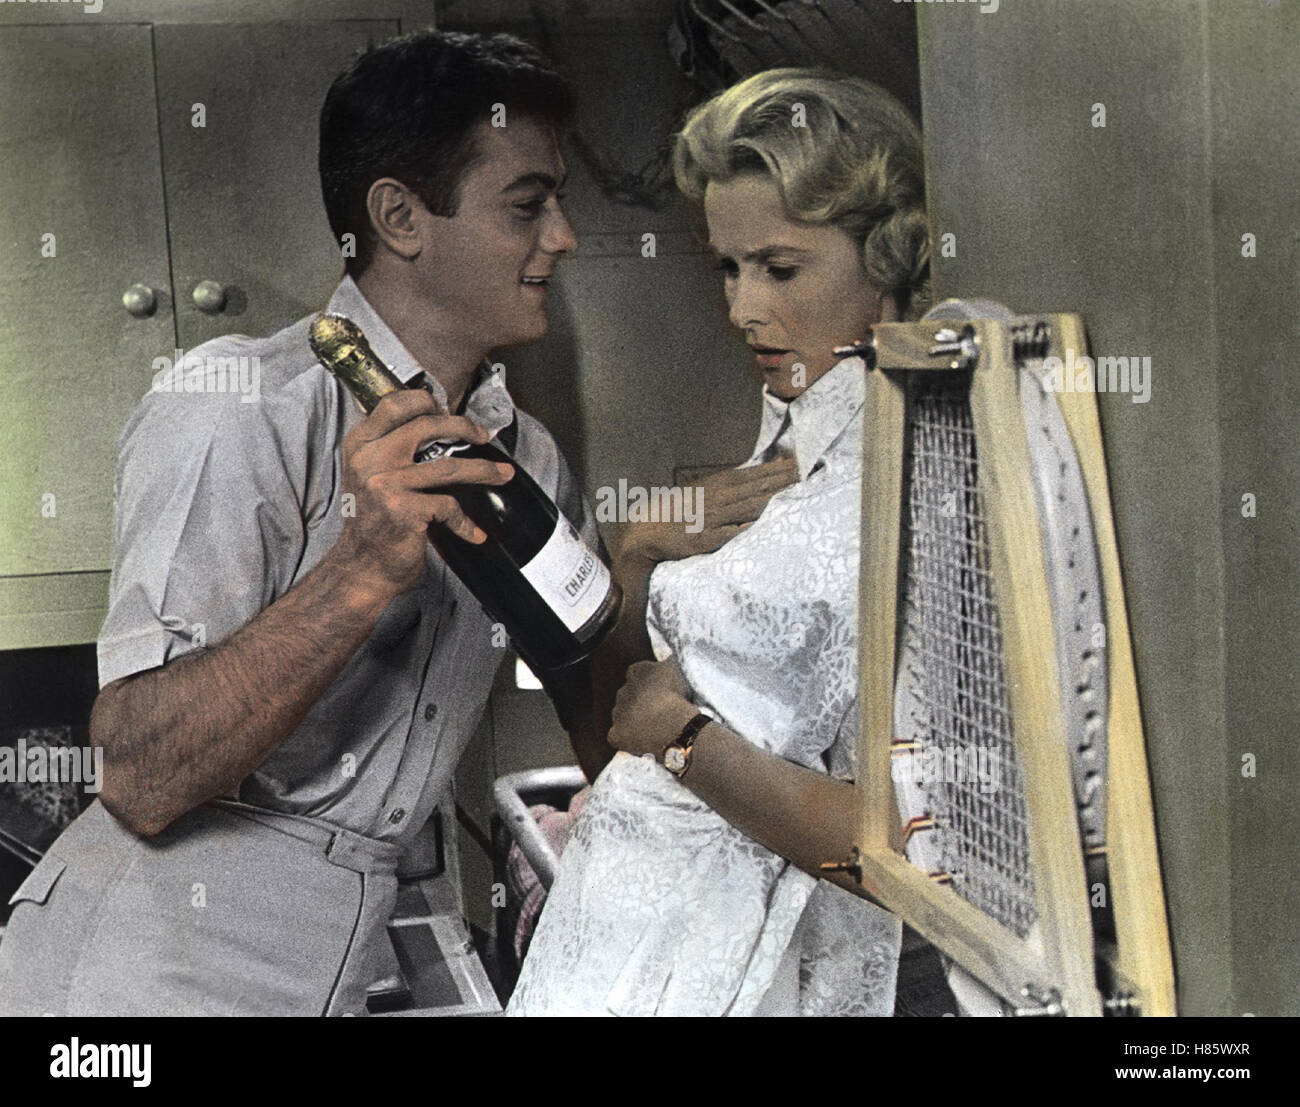 Unternehmen Petticoat, (OPERATION PETTICOAT) USA 1959, Regie: Blake Edwards, TONY CURTIS, DINA MERRILL, Stichwort: Flasche, Champagner Stock Photo